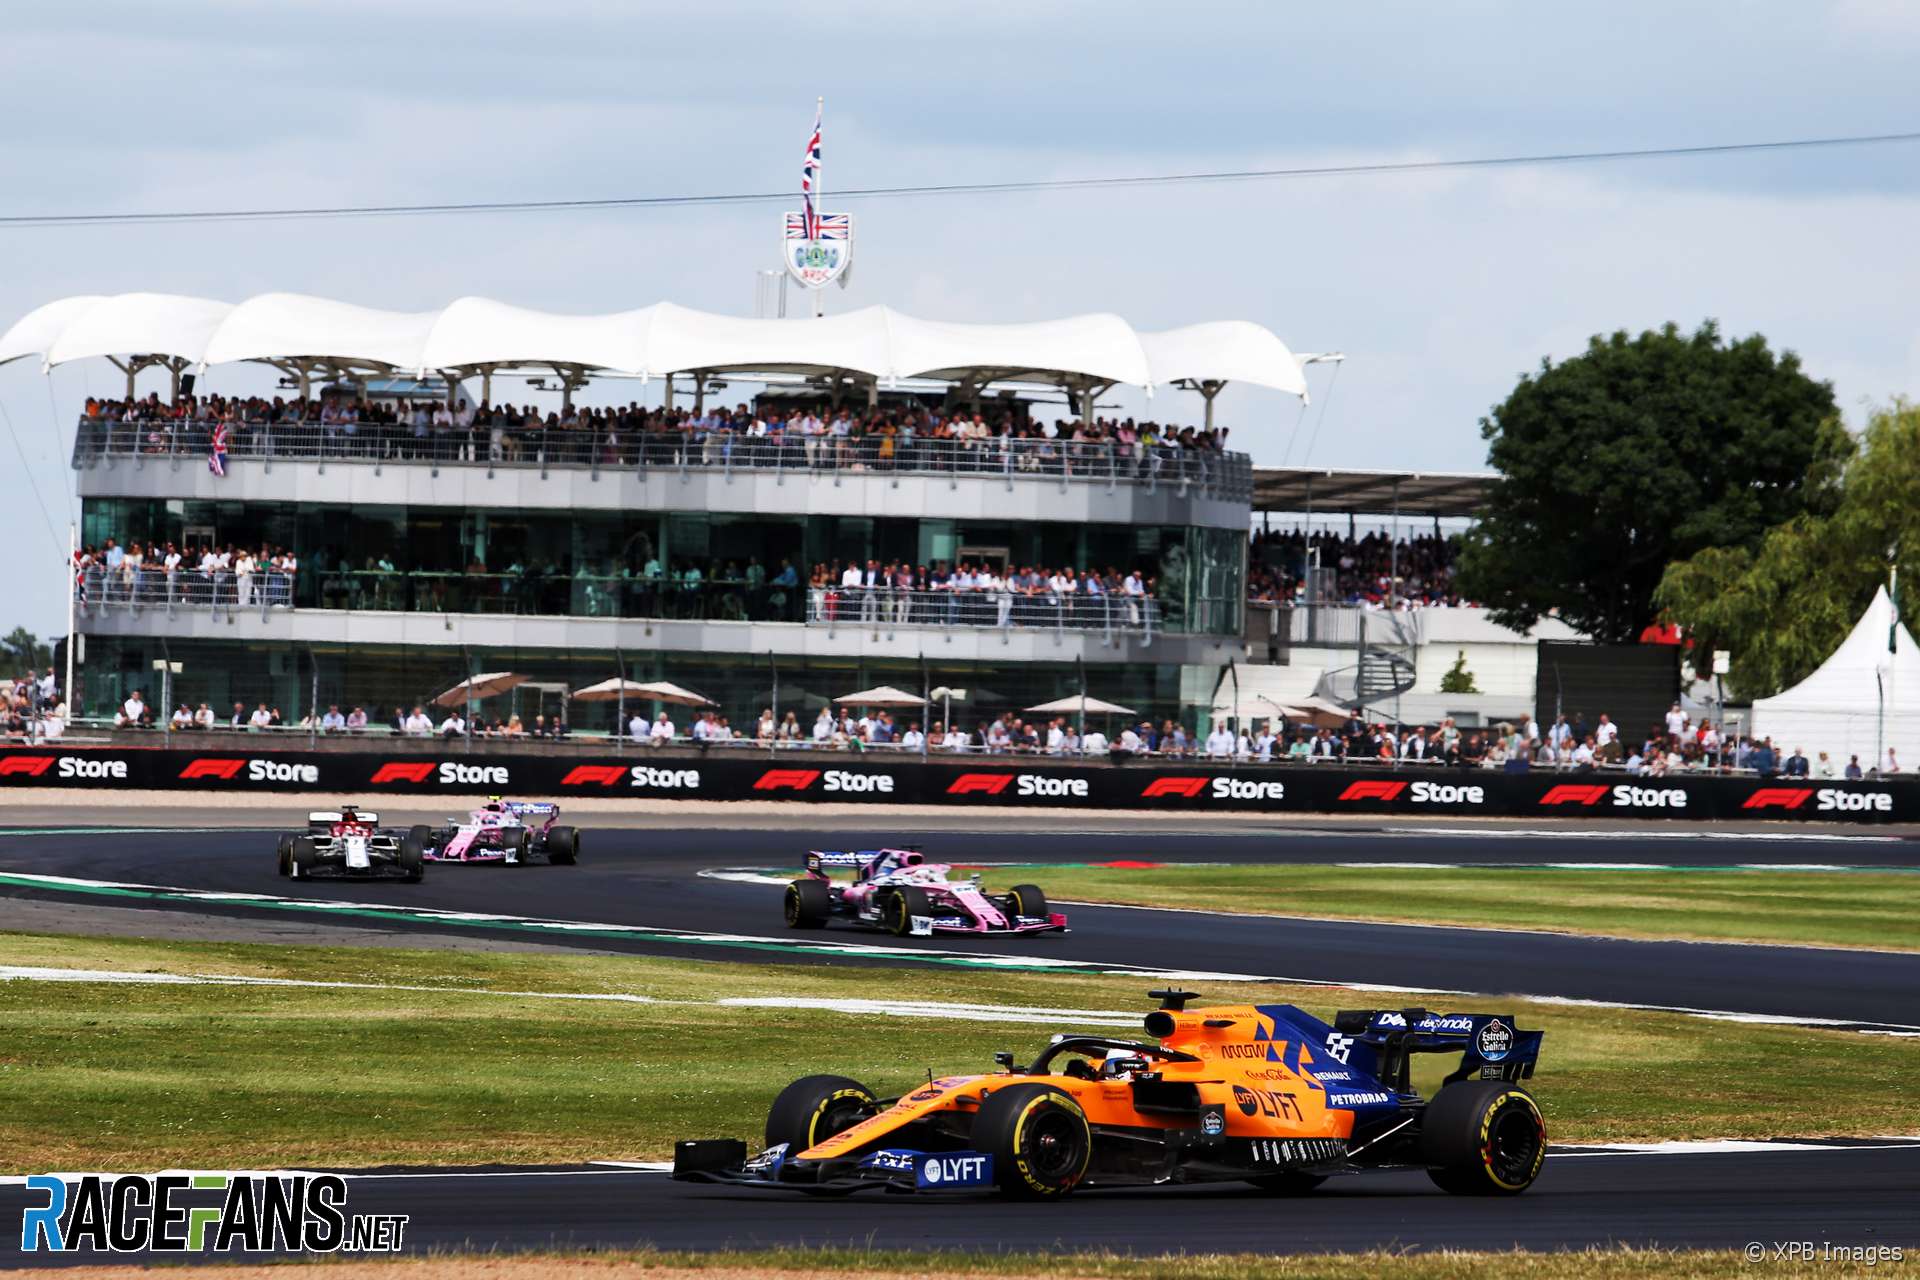 Carlos Sainz Jnr, McLaren, Silverstone, 2019